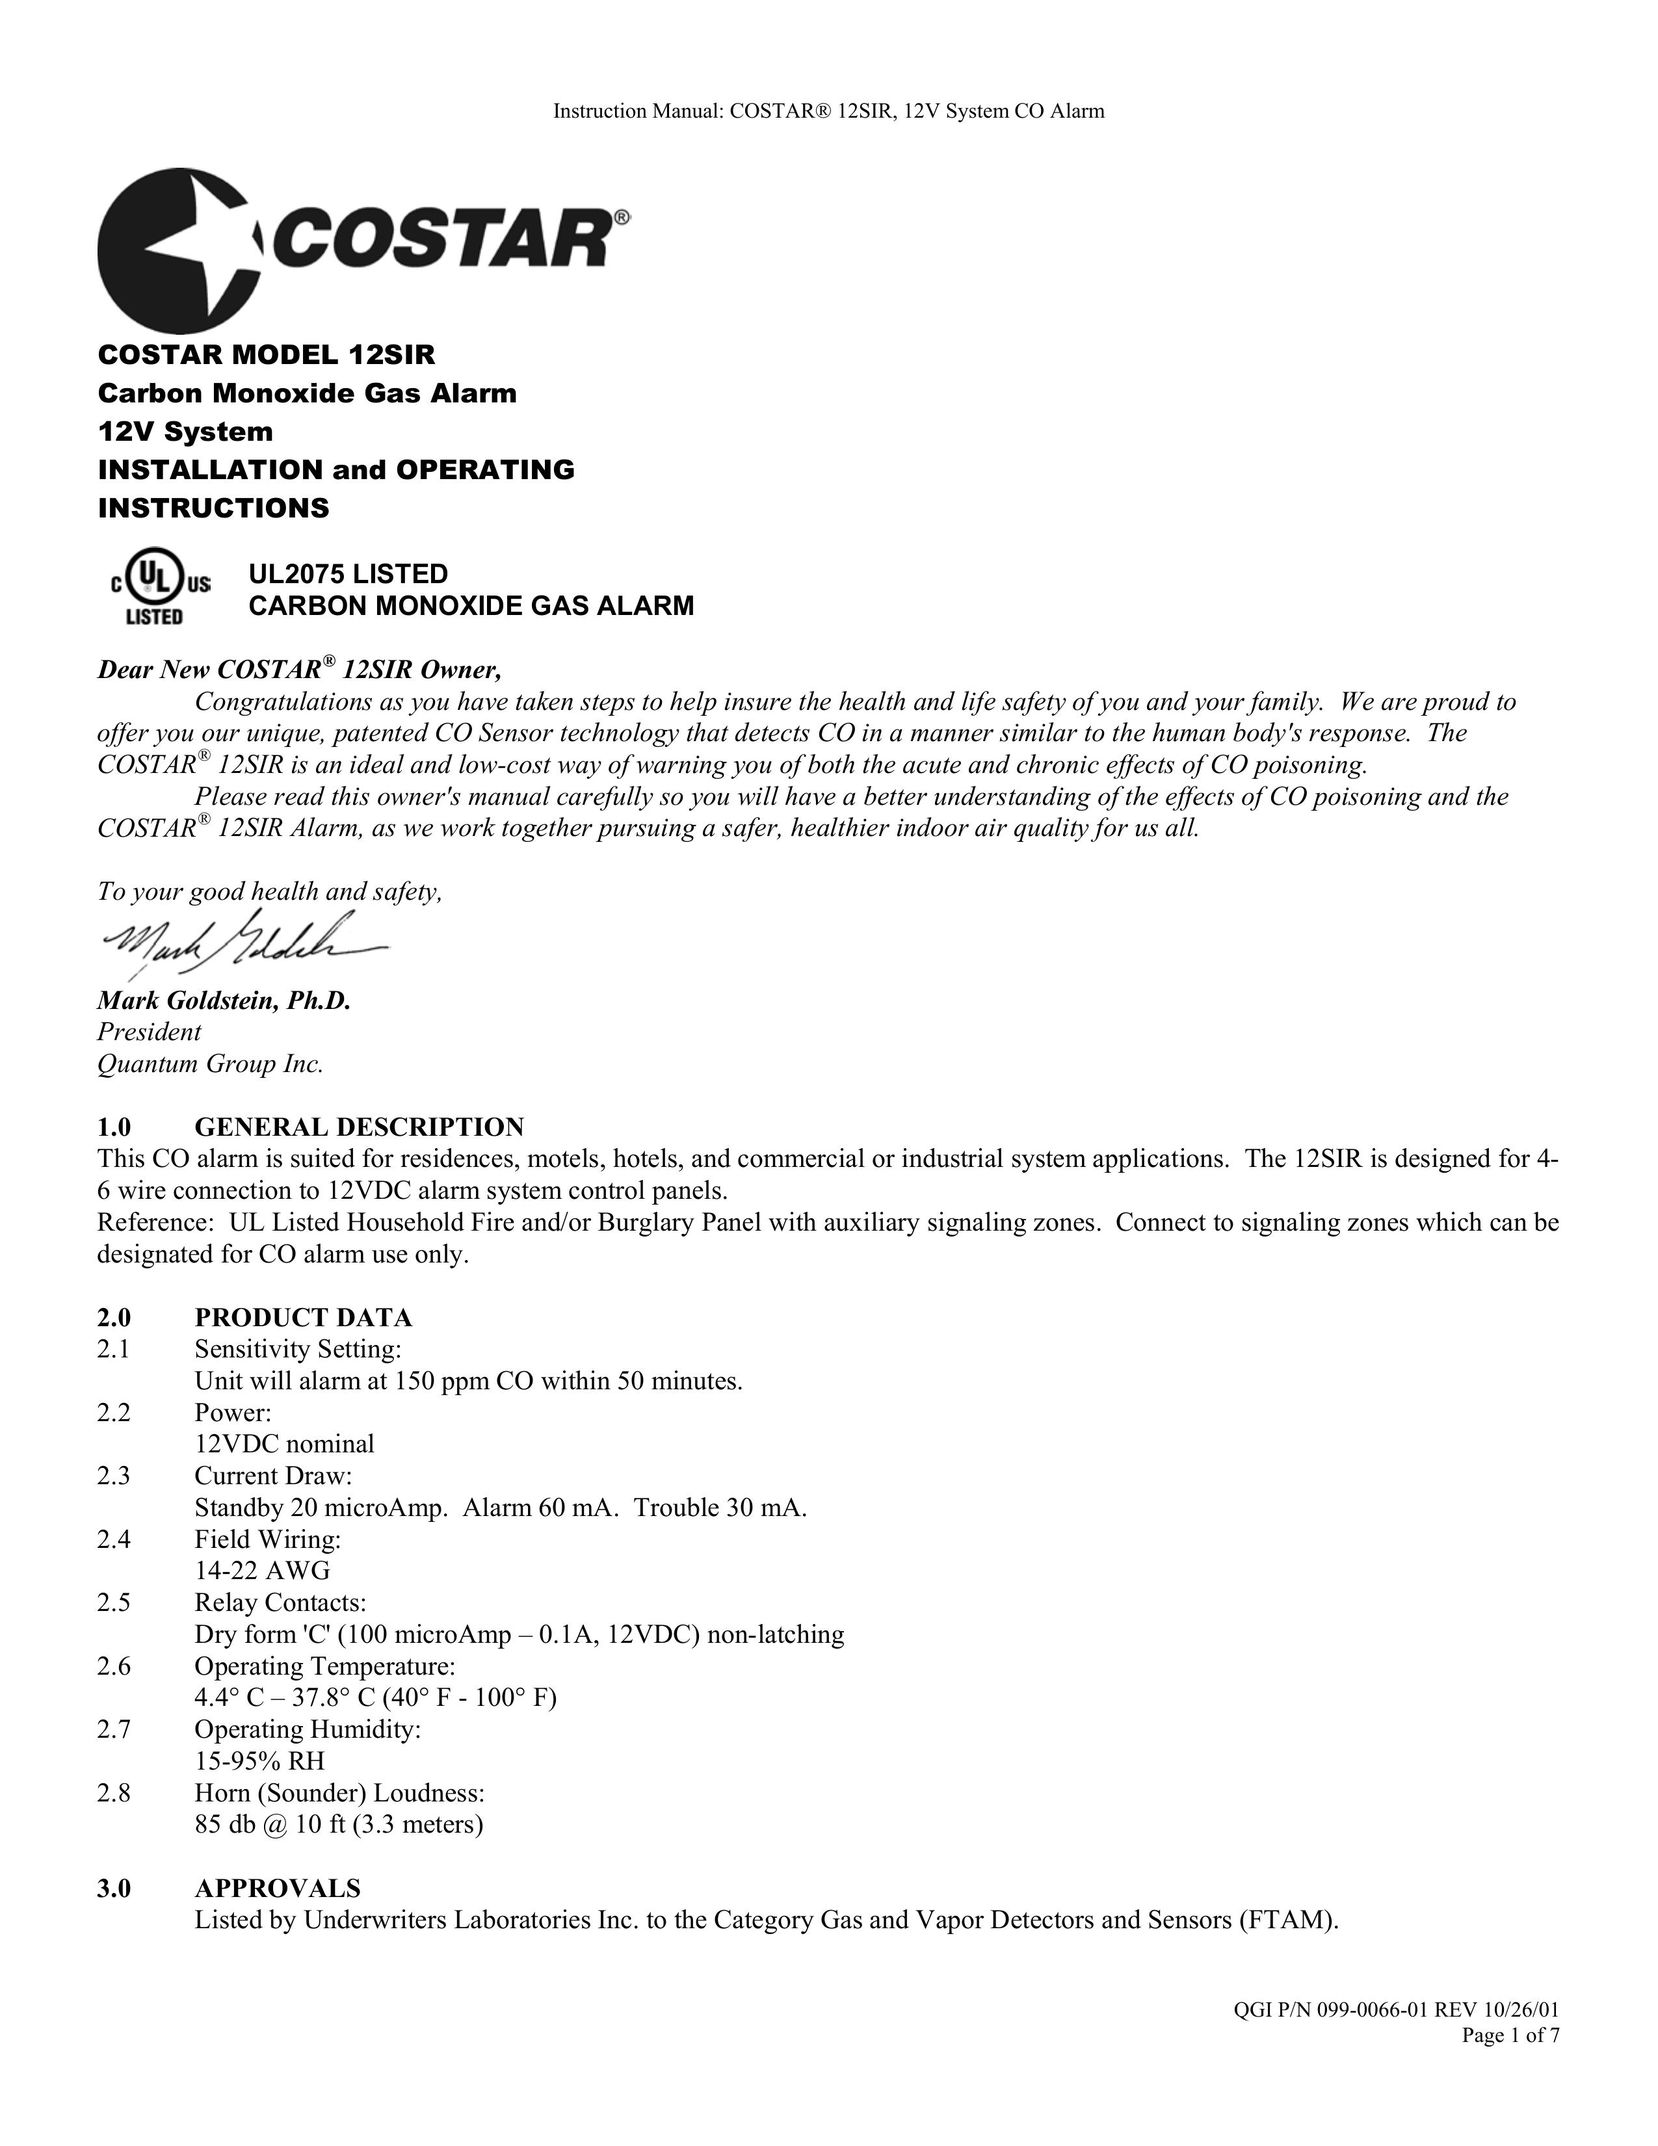 Costar 12SIR Carbon Monoxide Alarm User Manual